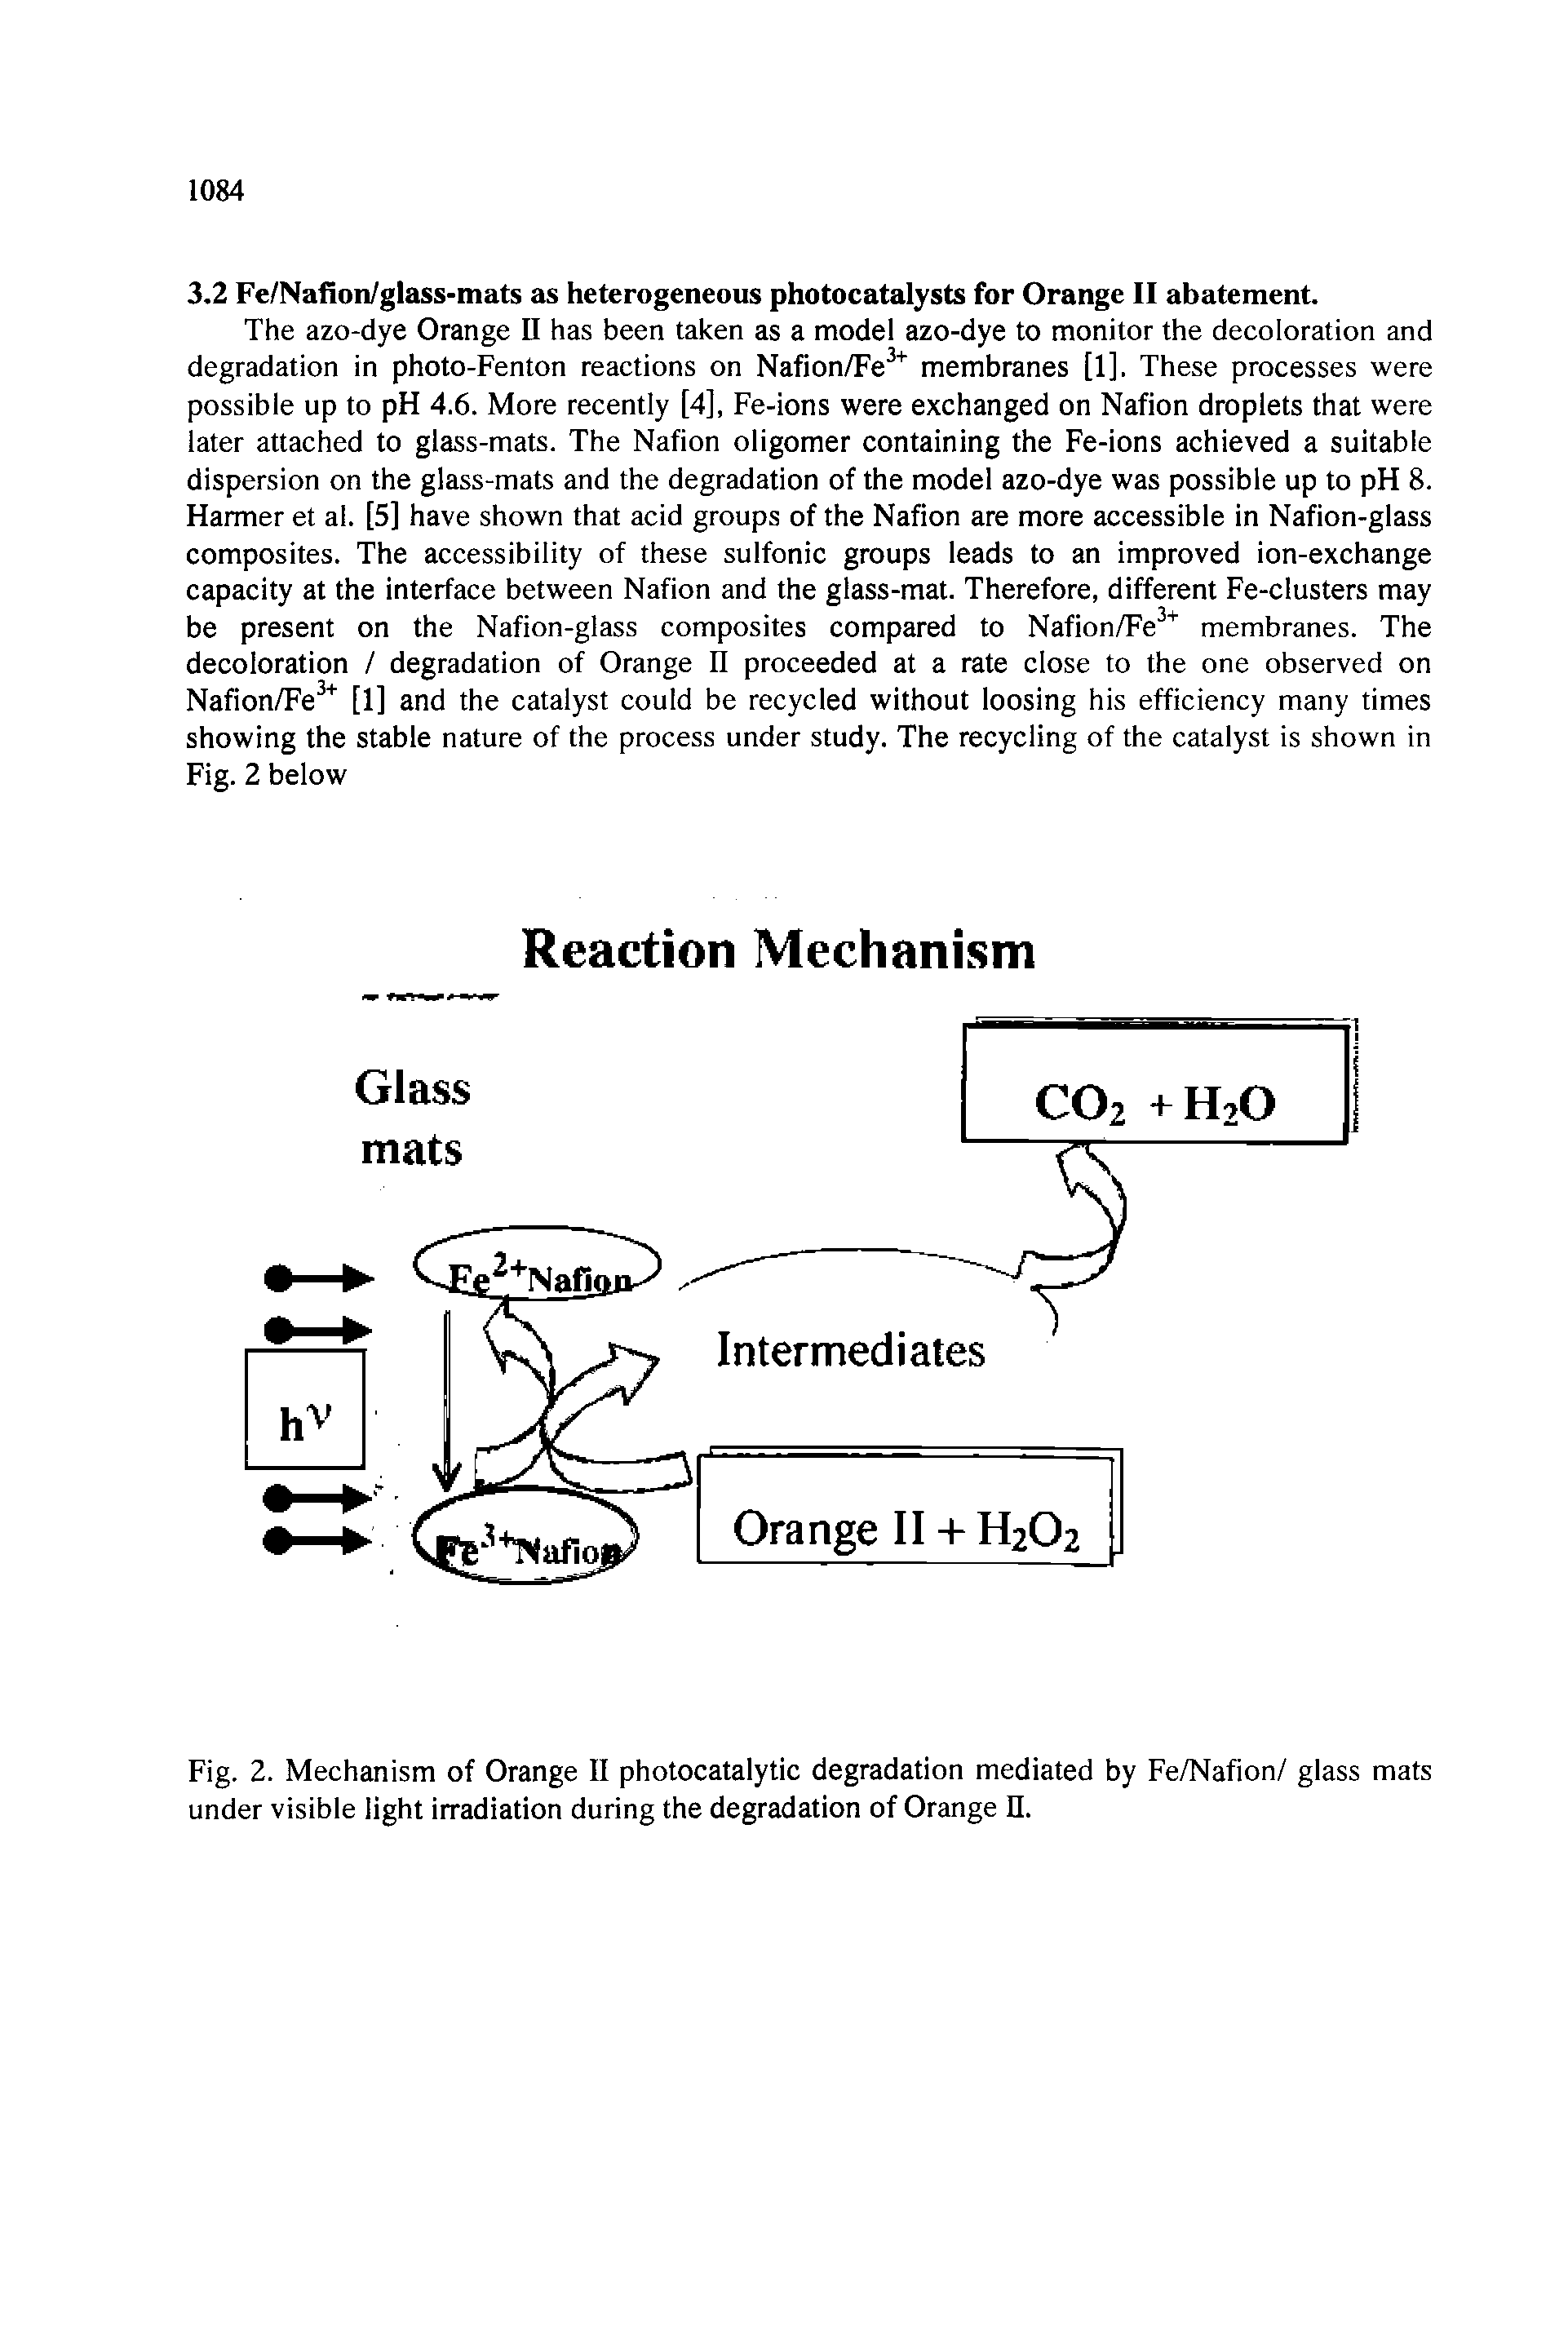 Fig. 2. Mechanism ot Orange II photocatalytic degradation mediated by Fe/Nation/ glass mats under visible light irradiation during the degradation ot Orange H.